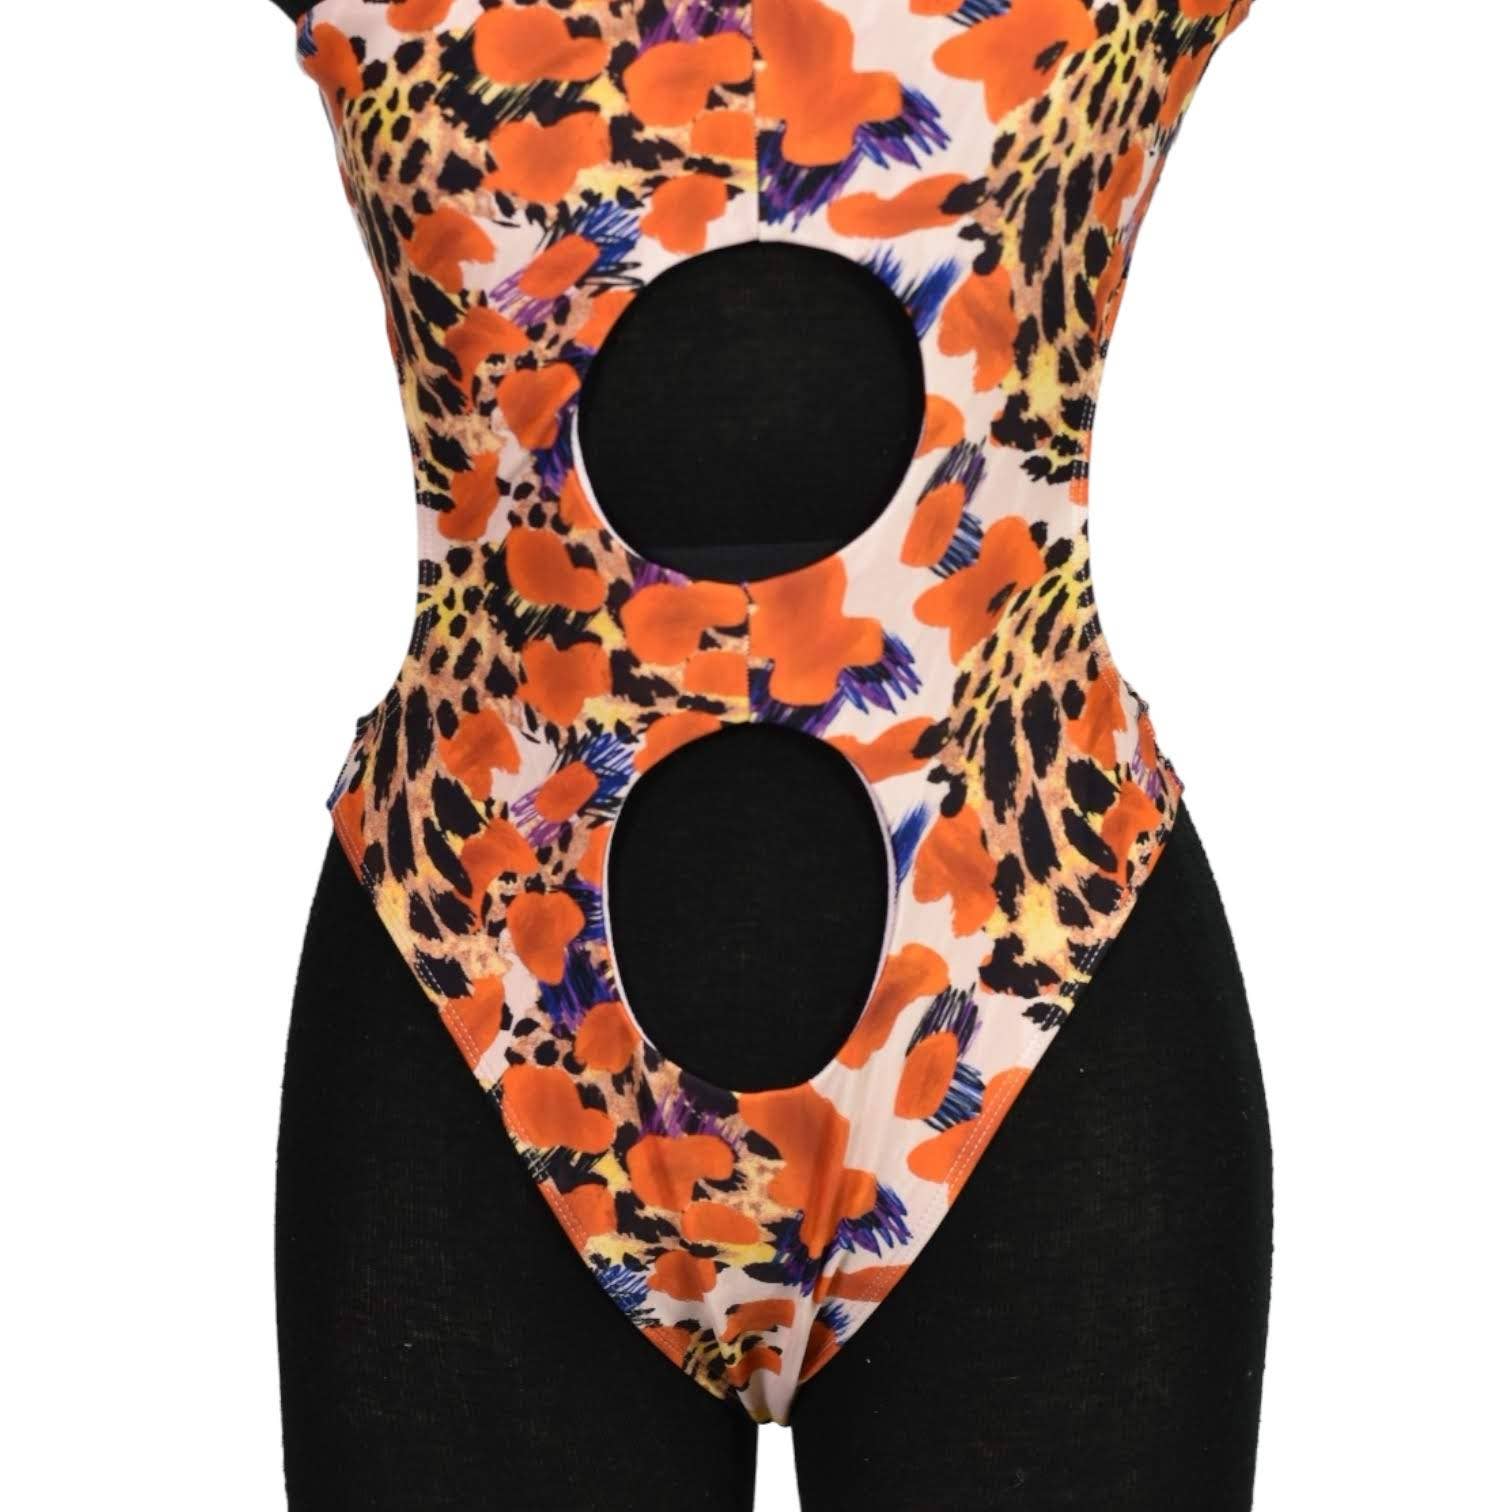 Icon Swim Monokini Orange Print One Piece Swimsuit Cutouts One Shoulder Large